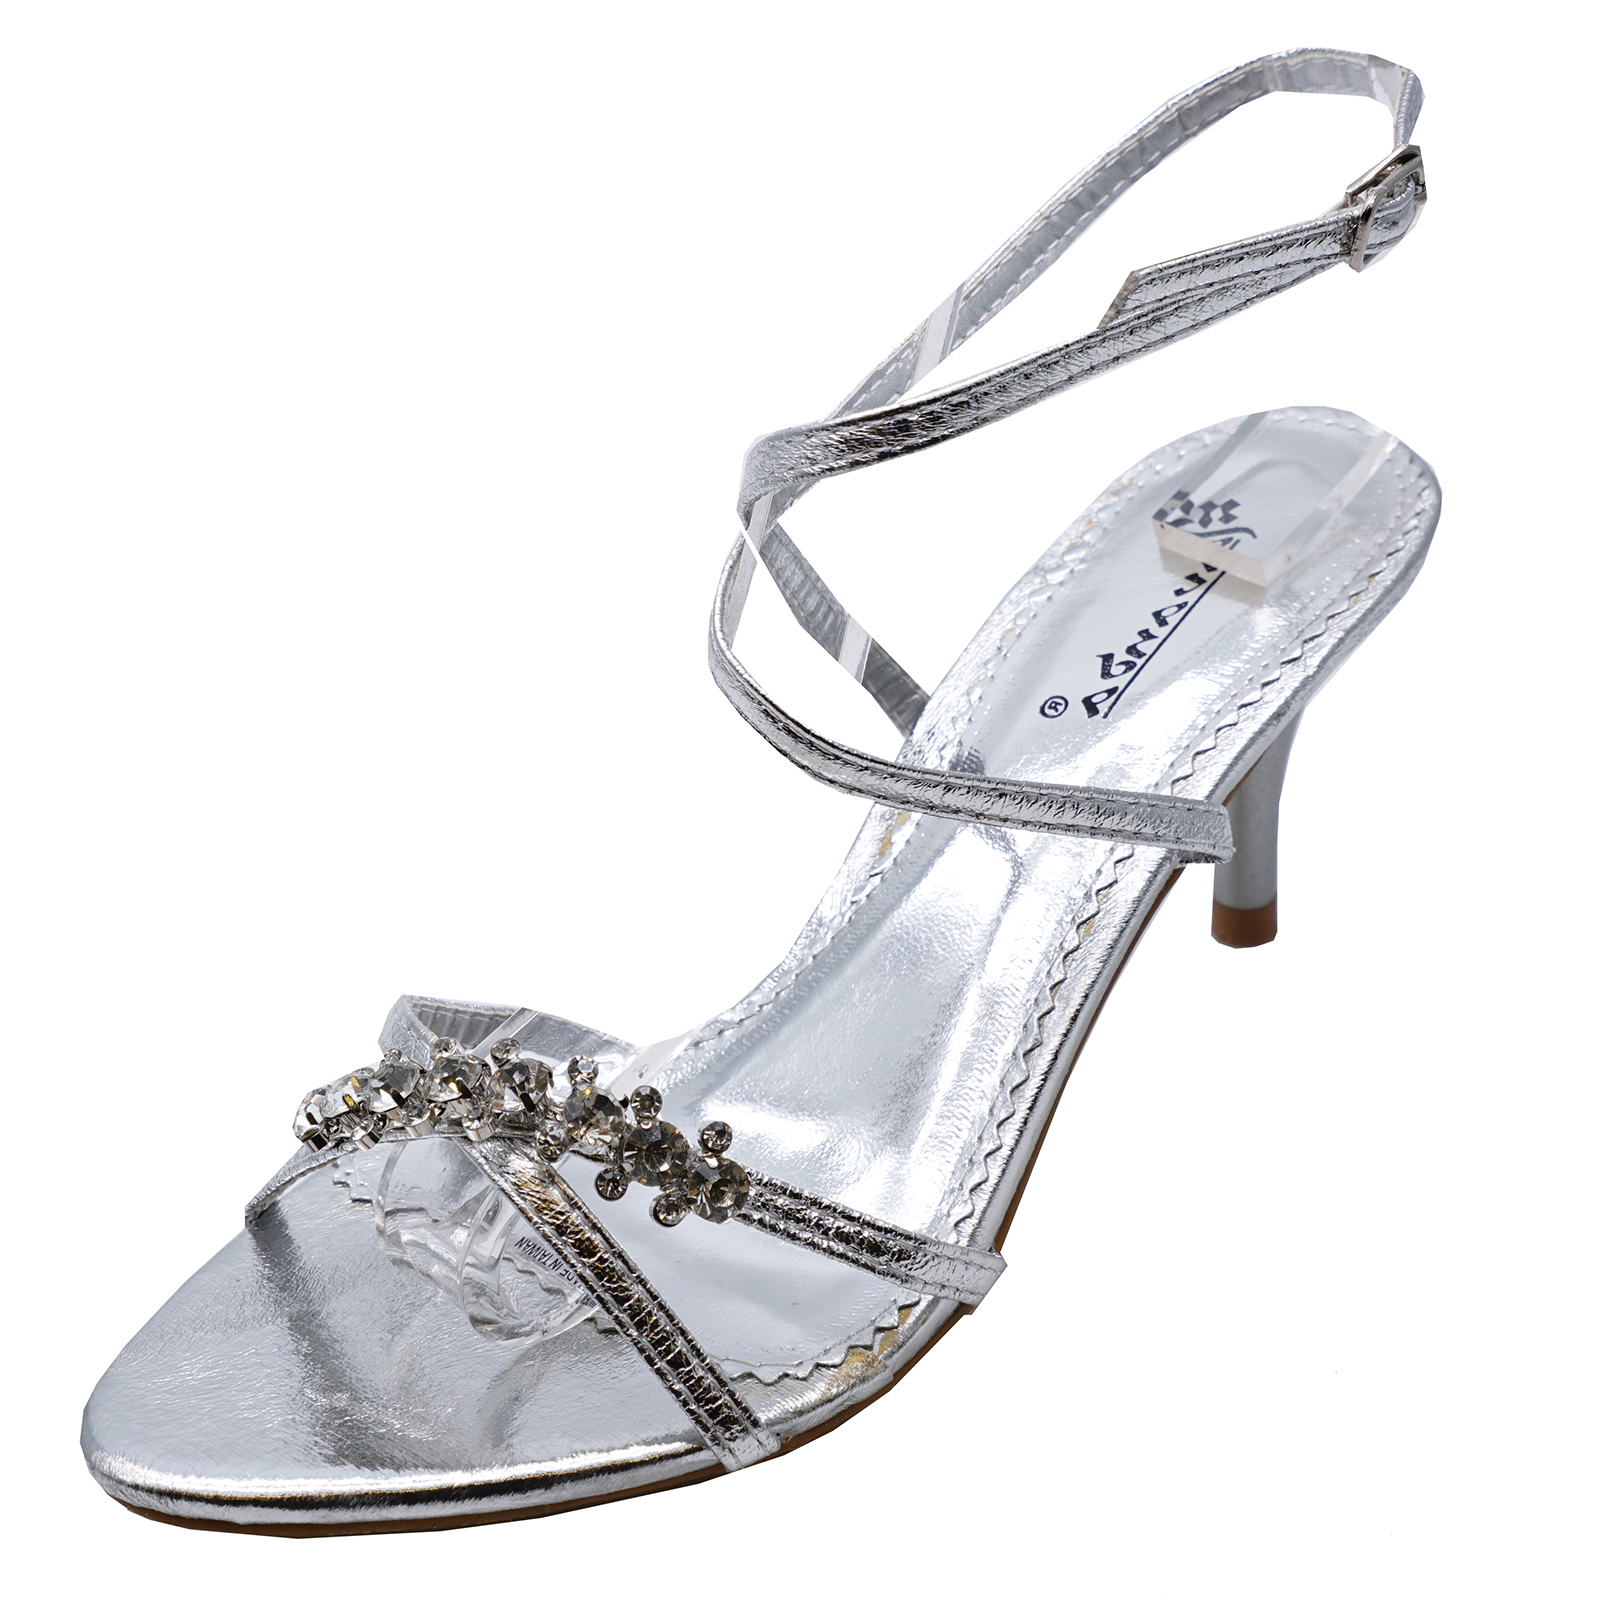 silver kitten heels ireland